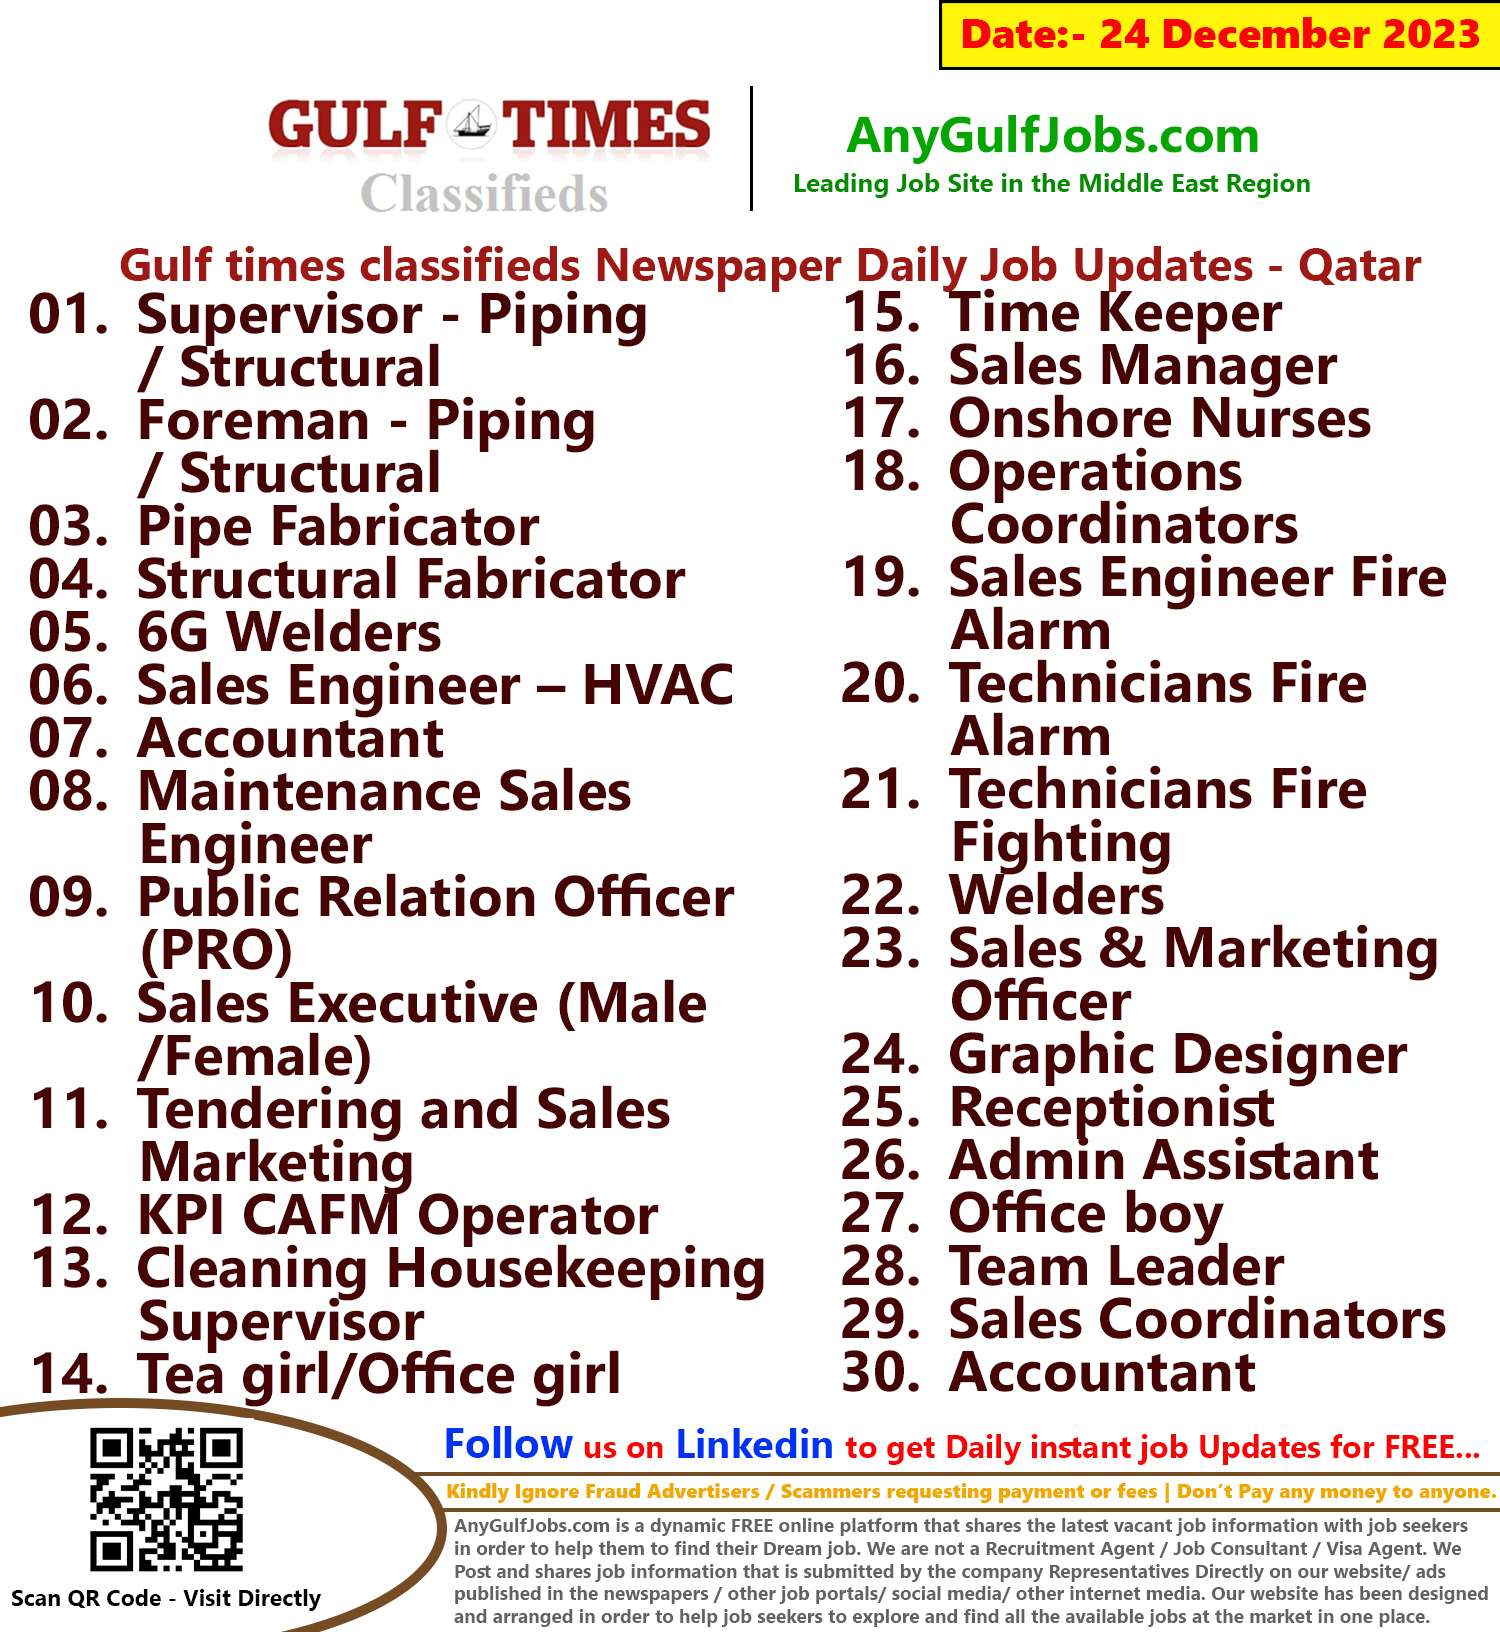 Gulf Times Classifieds Job Vacancies Qatar - 24 December 2023